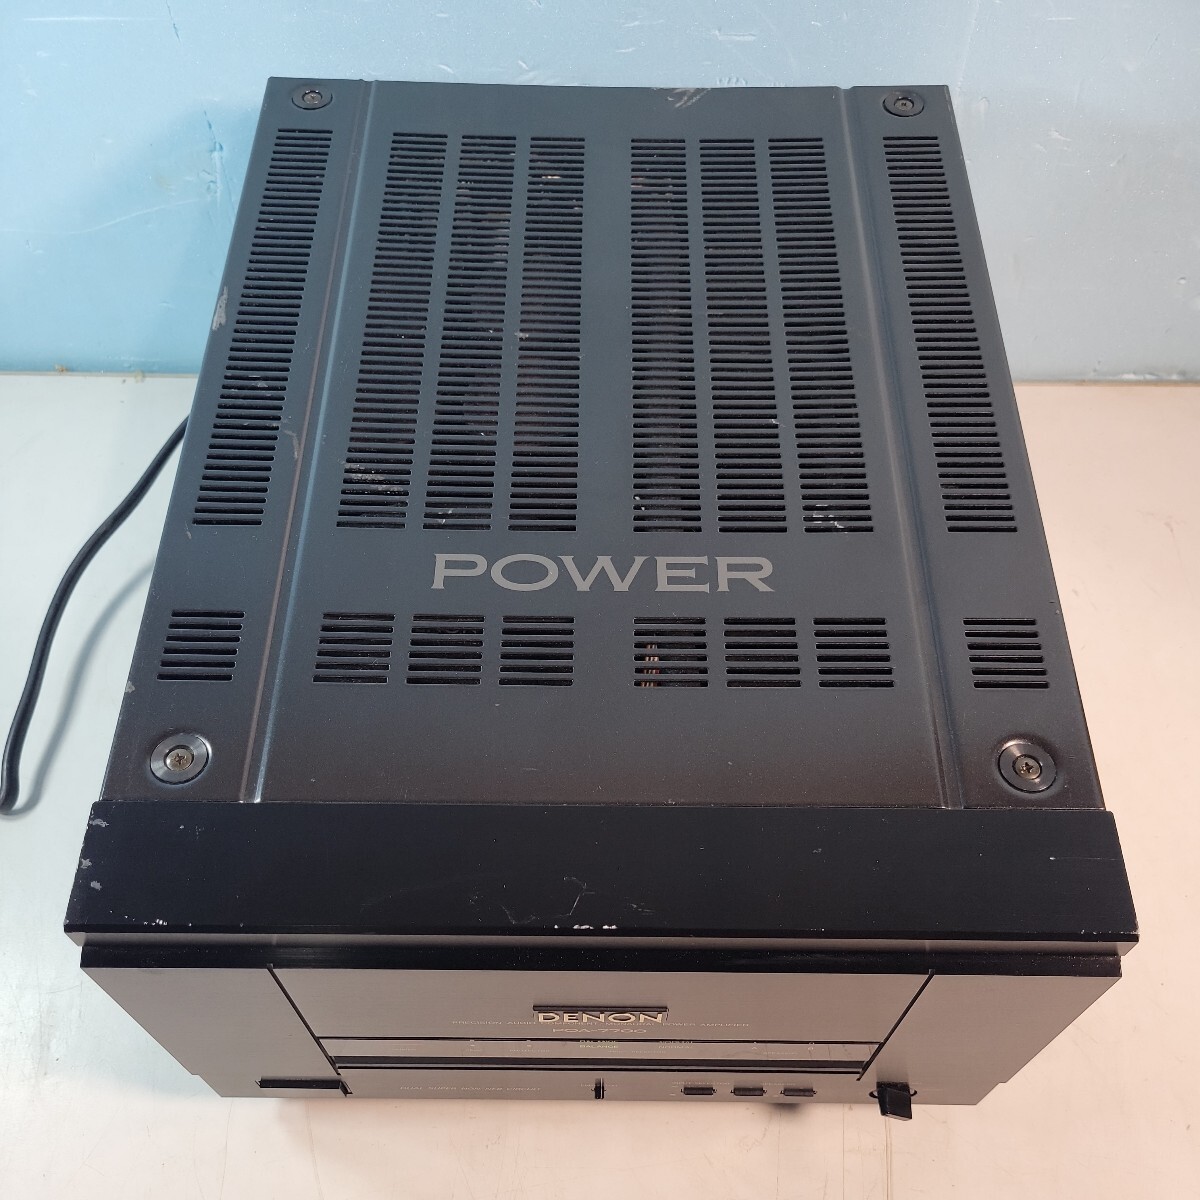 DENON POA-7700 power amplifier secondhand goods control number 2404296